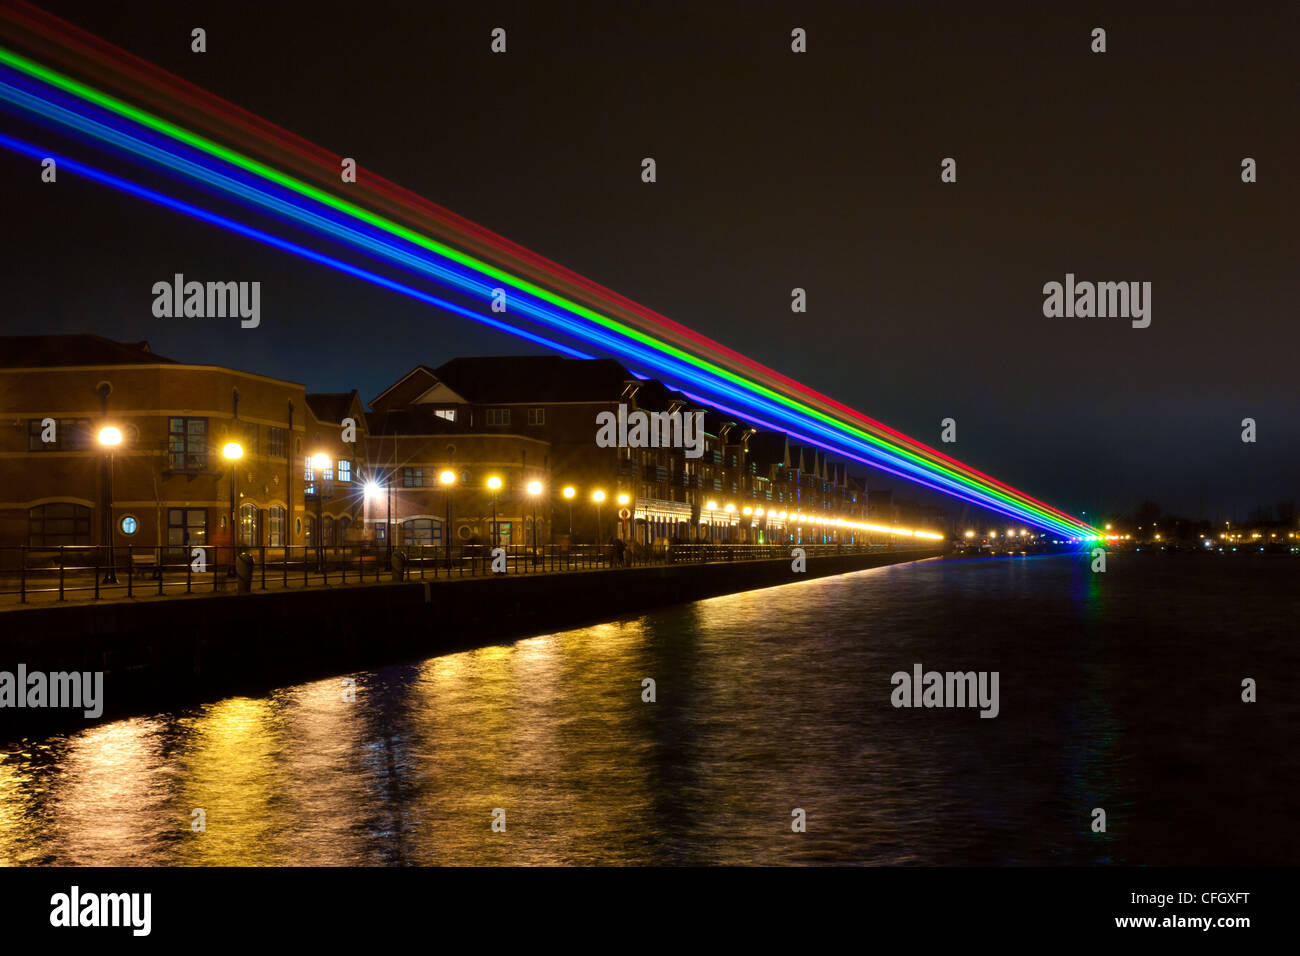 The Global Rainbow laser show by Yvette Mattern at Preston Docks ...